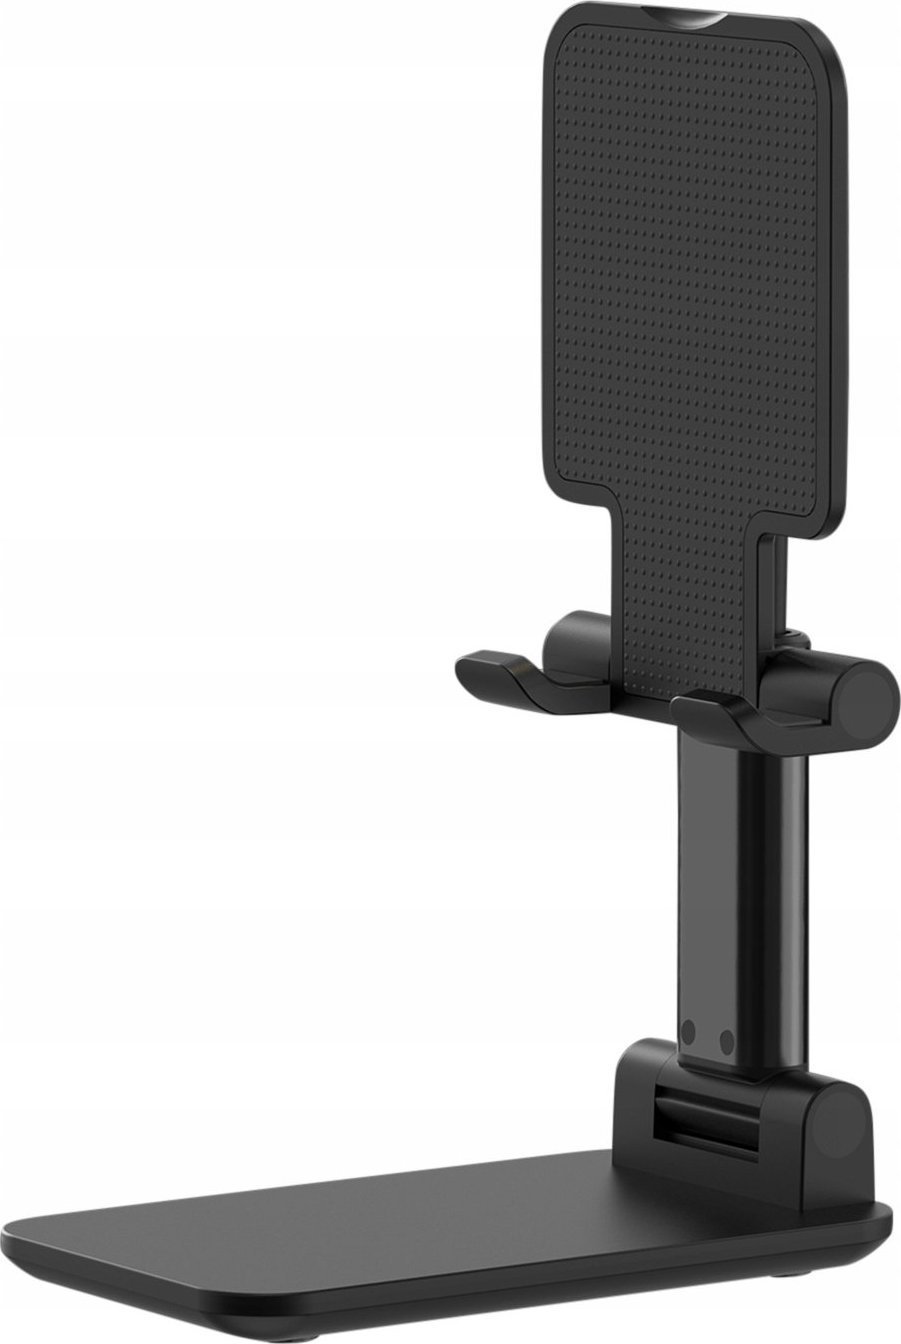 Suport si docking tablete - Xrec Stand Suport Stand Stand pentru Telefon Tableta Smartphone / Xrec